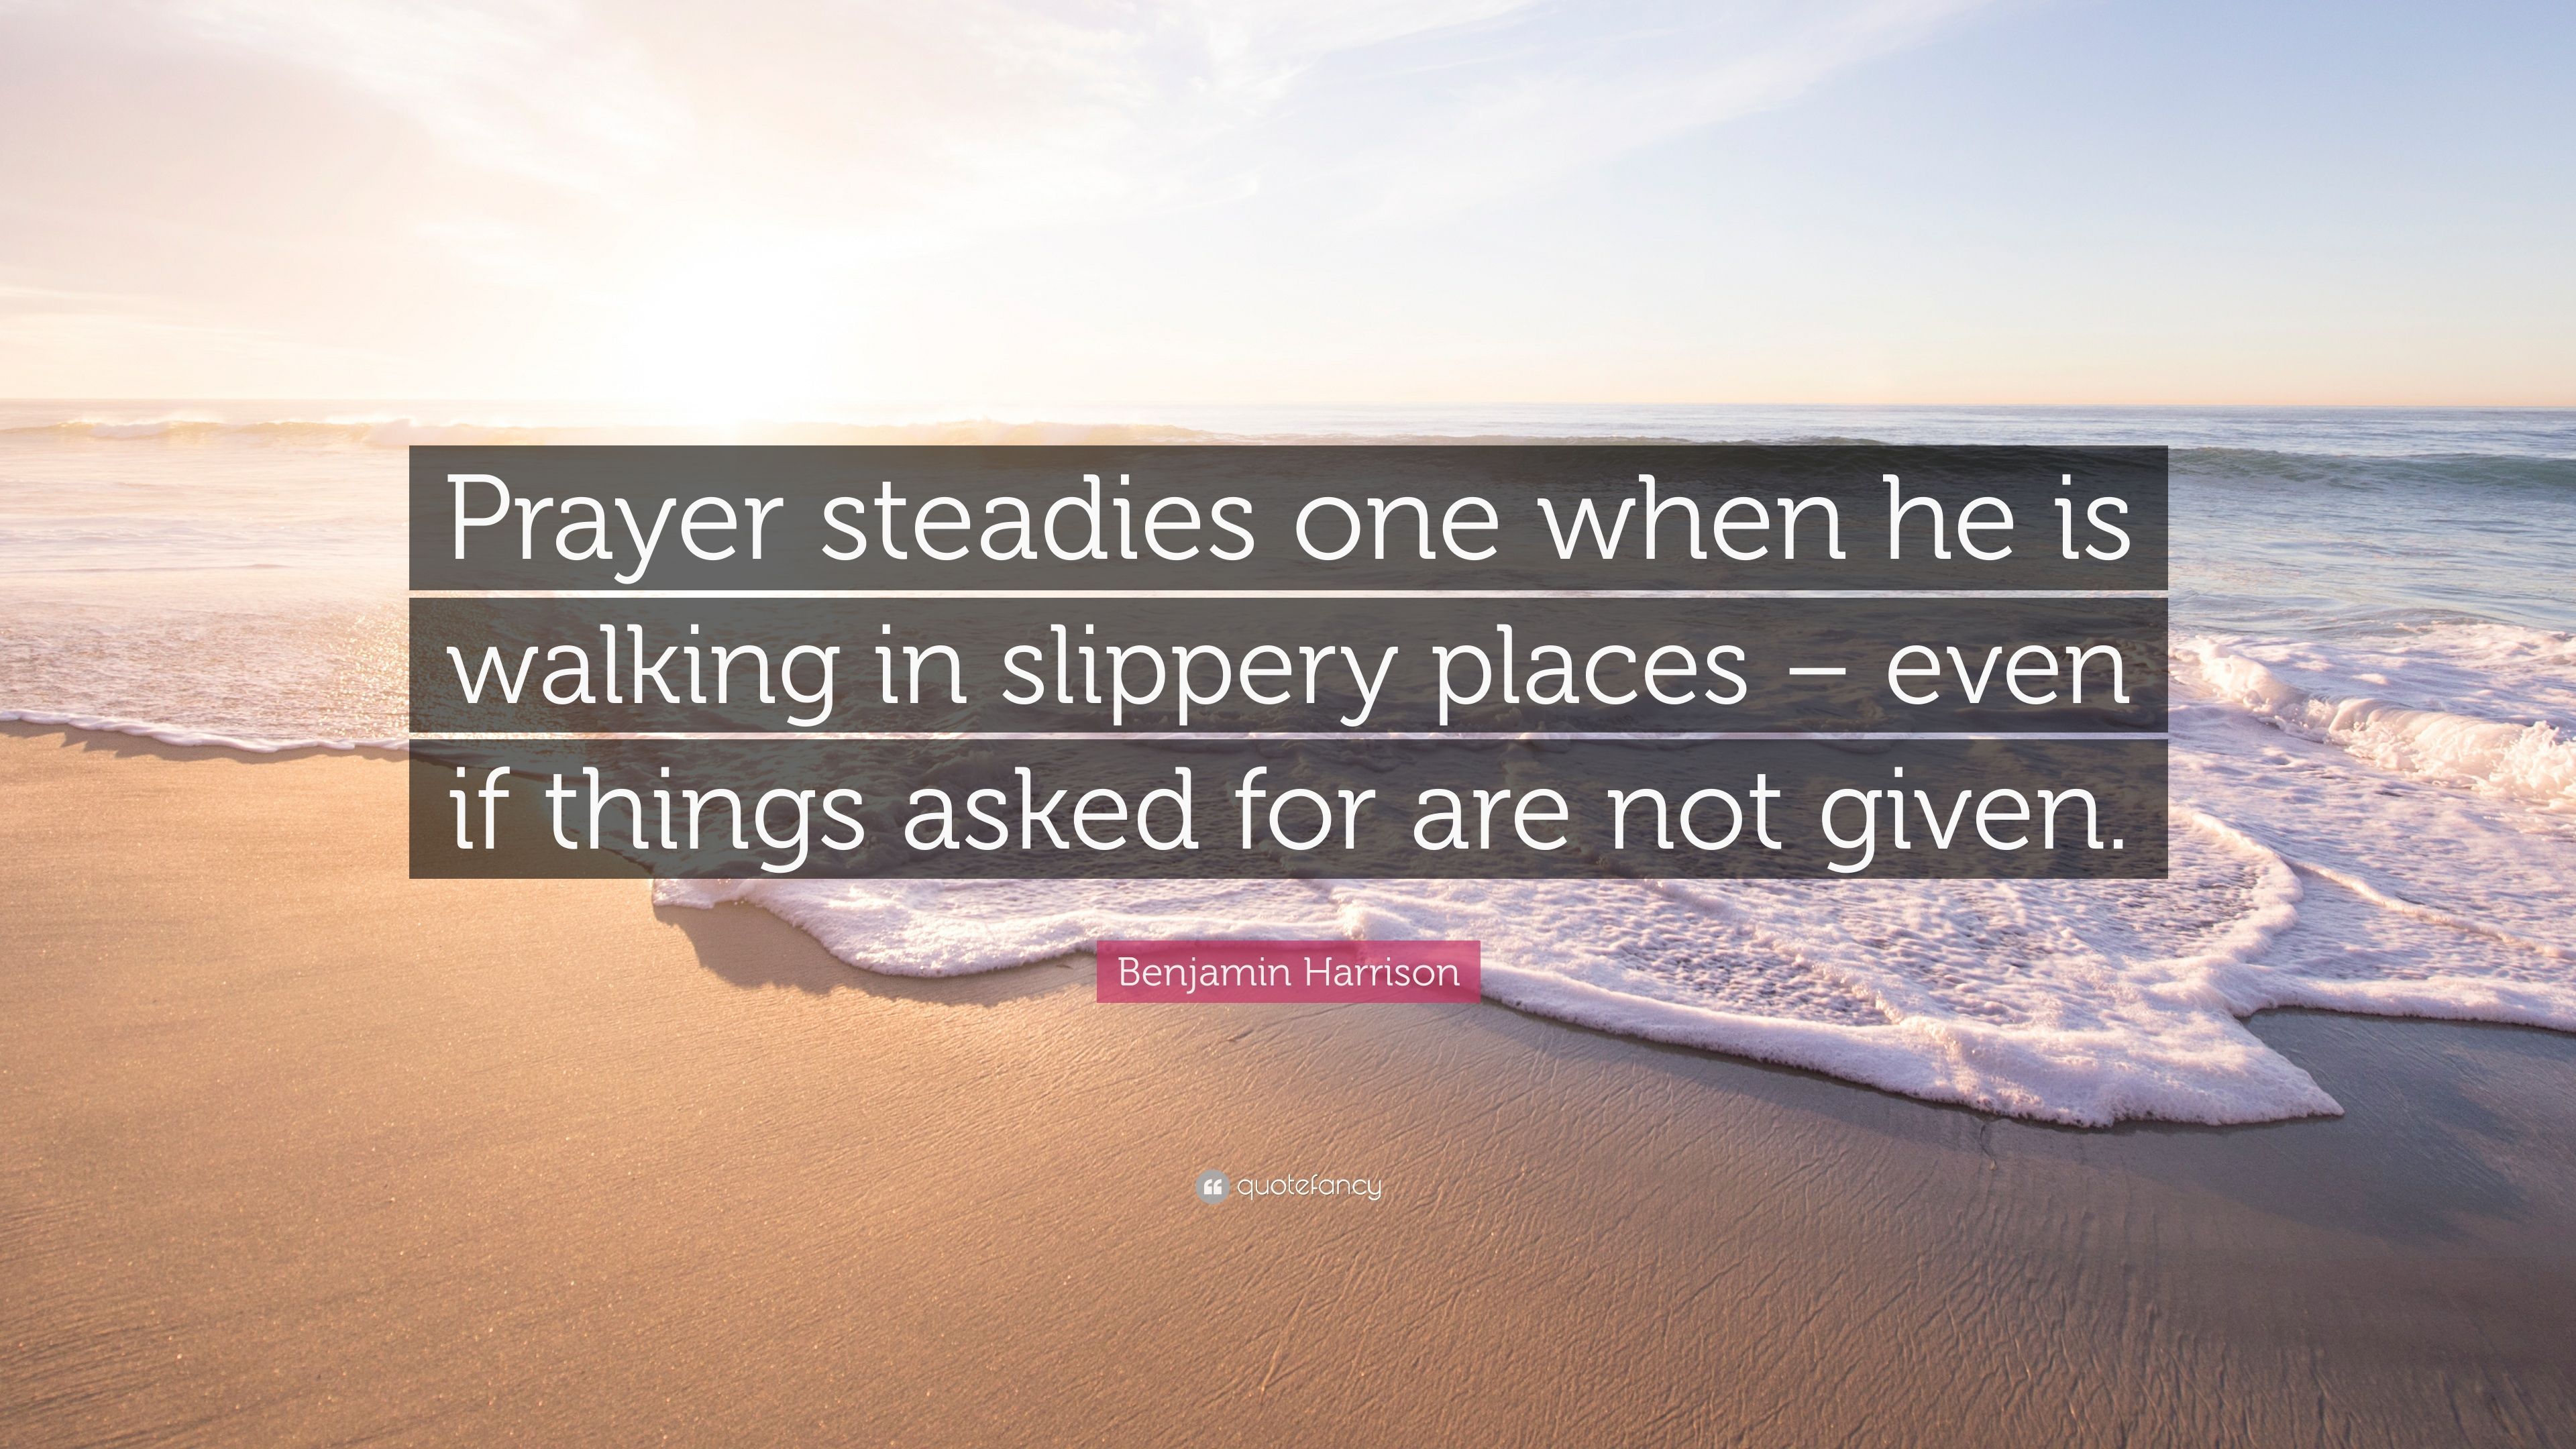 Benjamin Harrison Quote: "Prayer steadies one when he is walking.